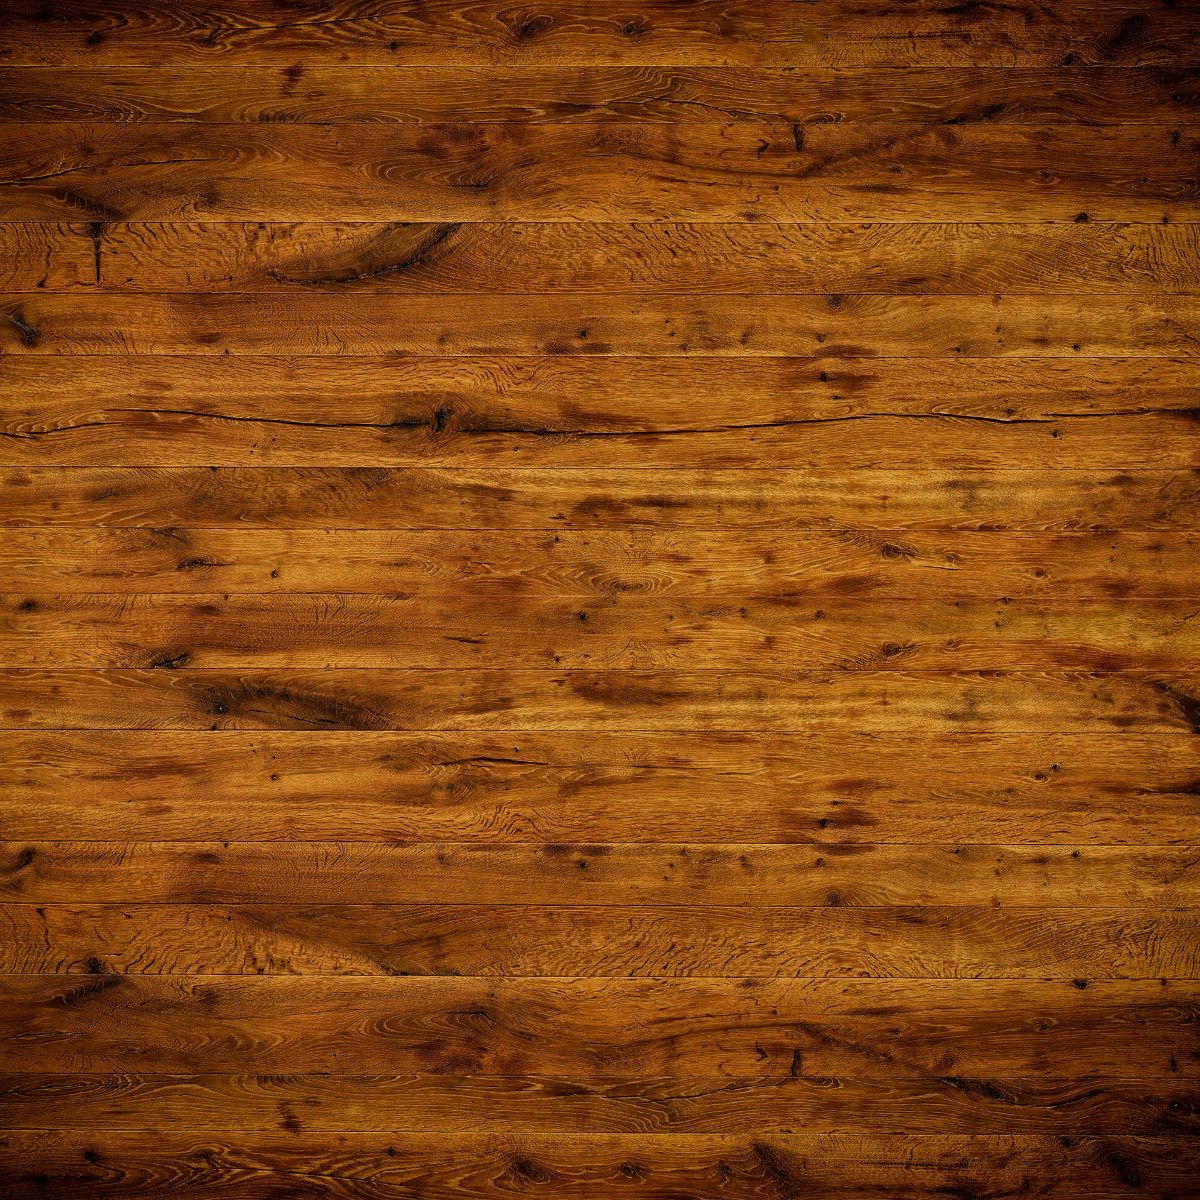 Oude houten planken